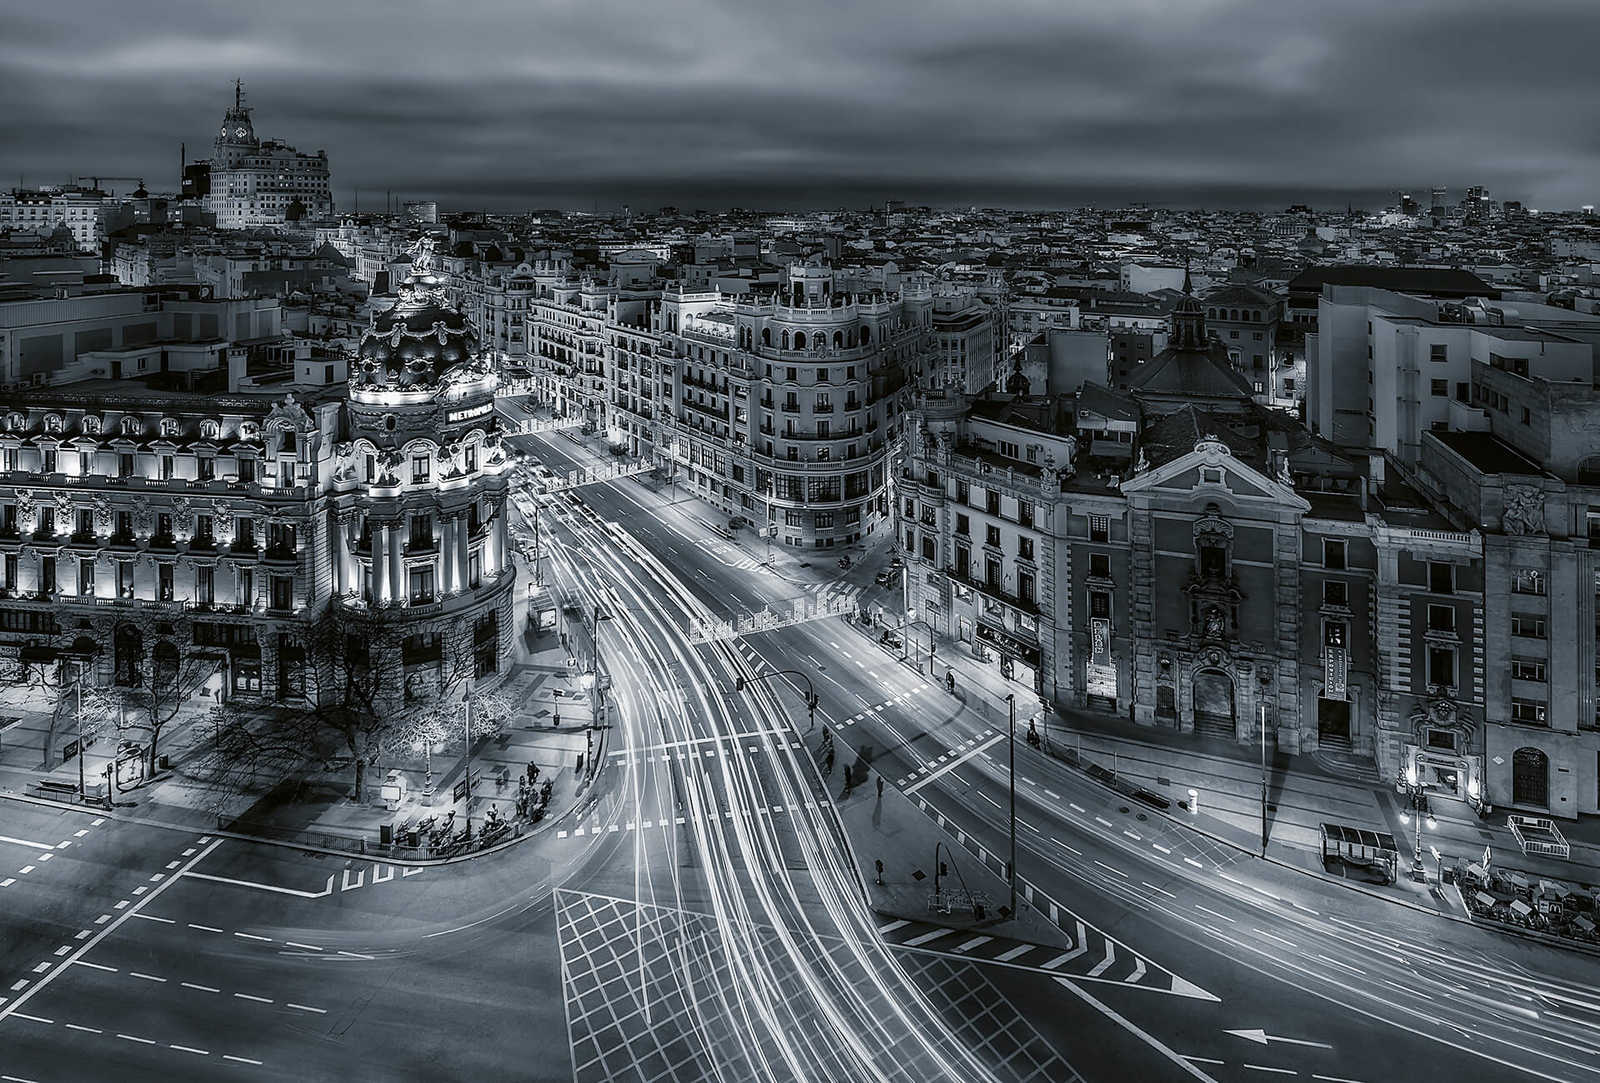         Photo wallpaper Madrid city - grey, white, black
    